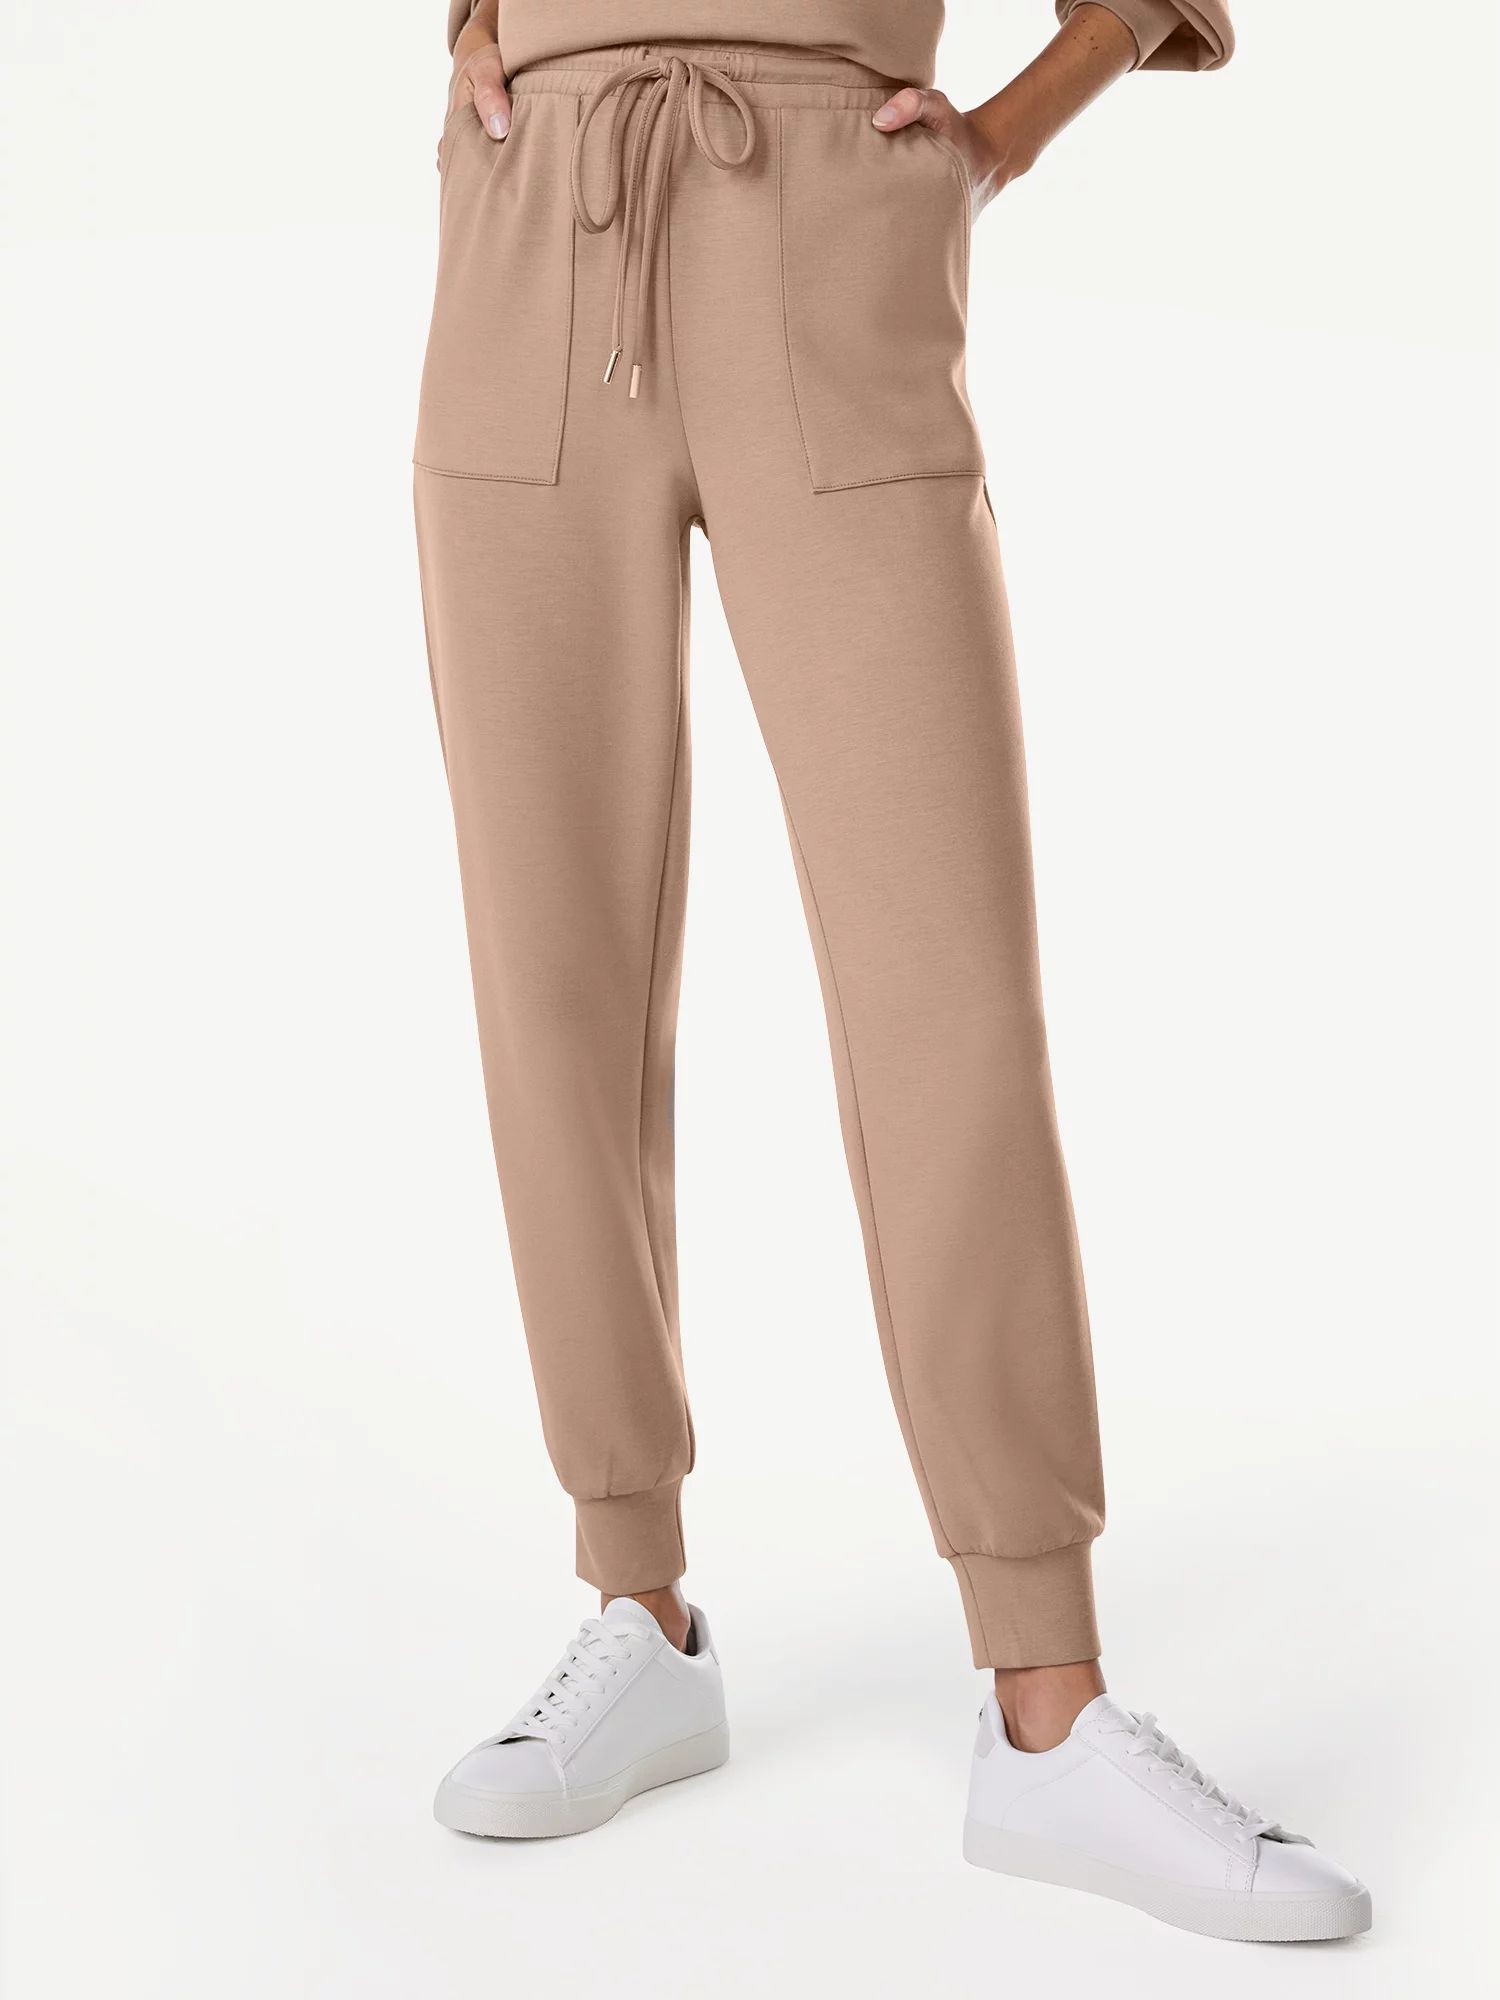 Scoop Women's Scuba Knit Pants with Pockets, Sizes XS-XXL | Walmart (US)